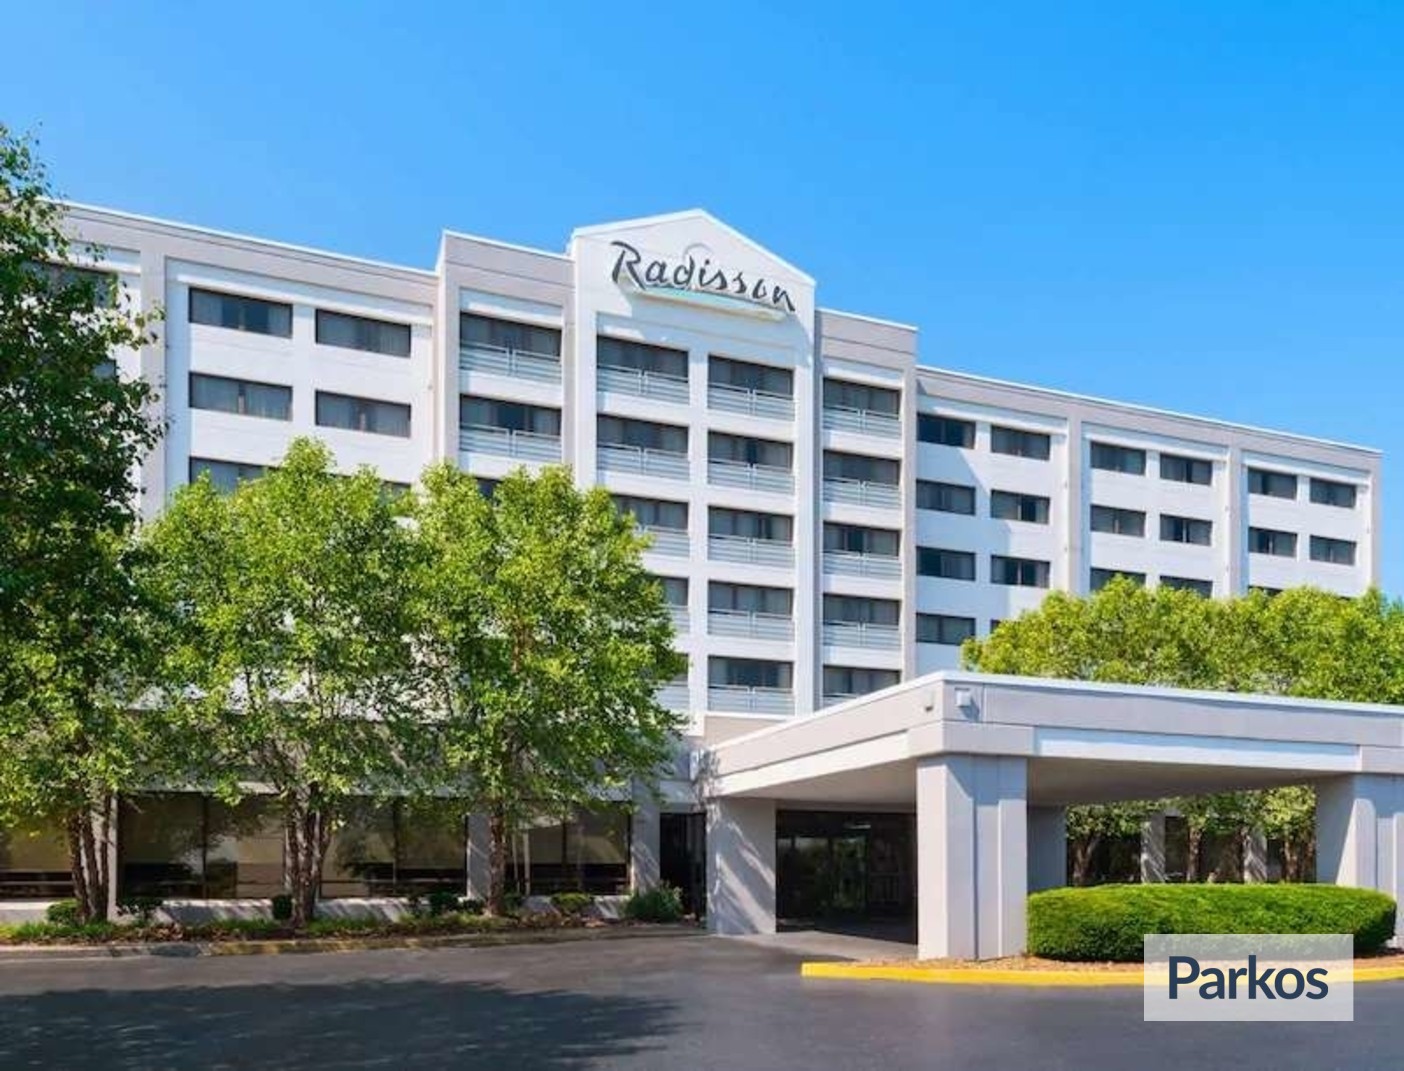 Radisson Hotel (BNA) - Nashville Airport Parking - picture 1